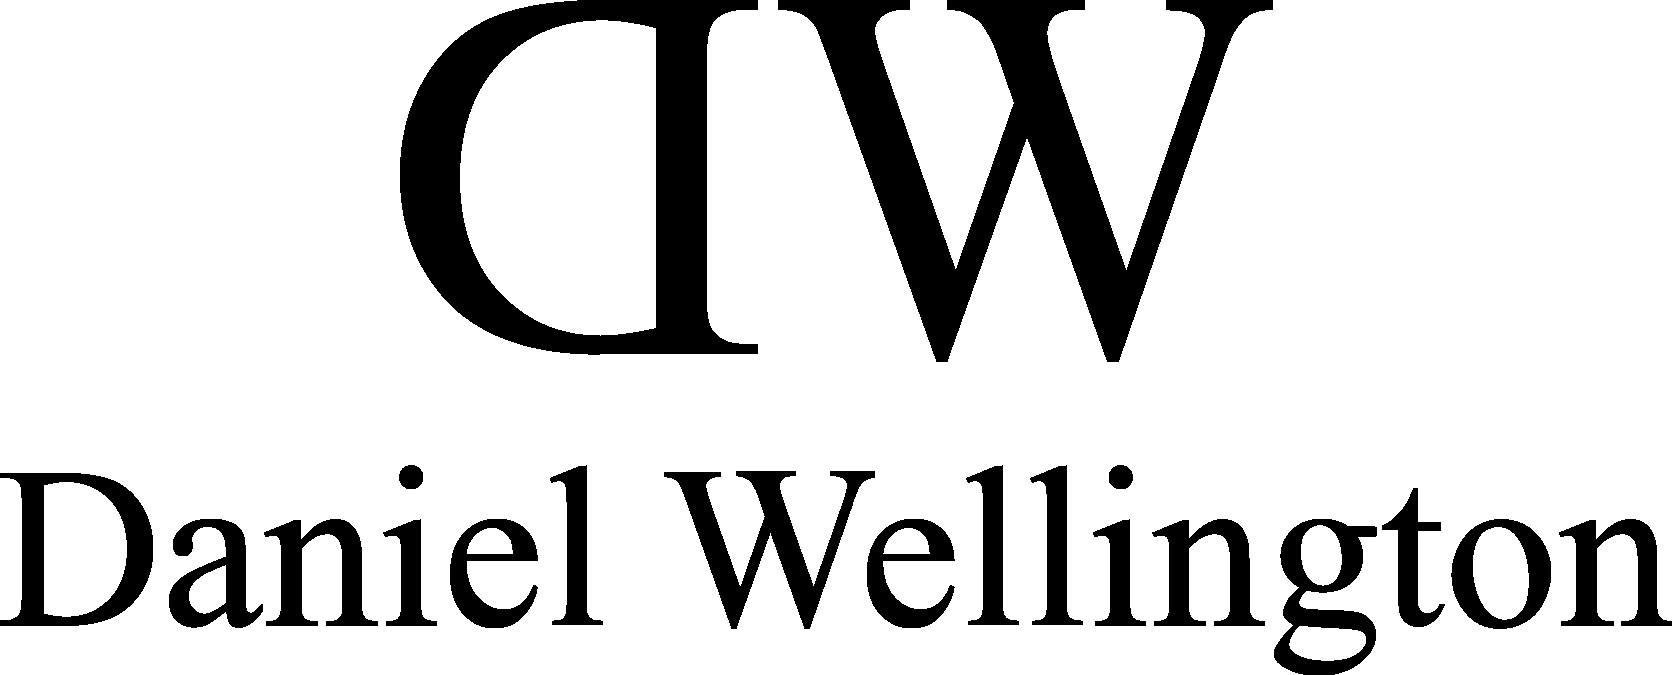 Daniel Wellington Logo png